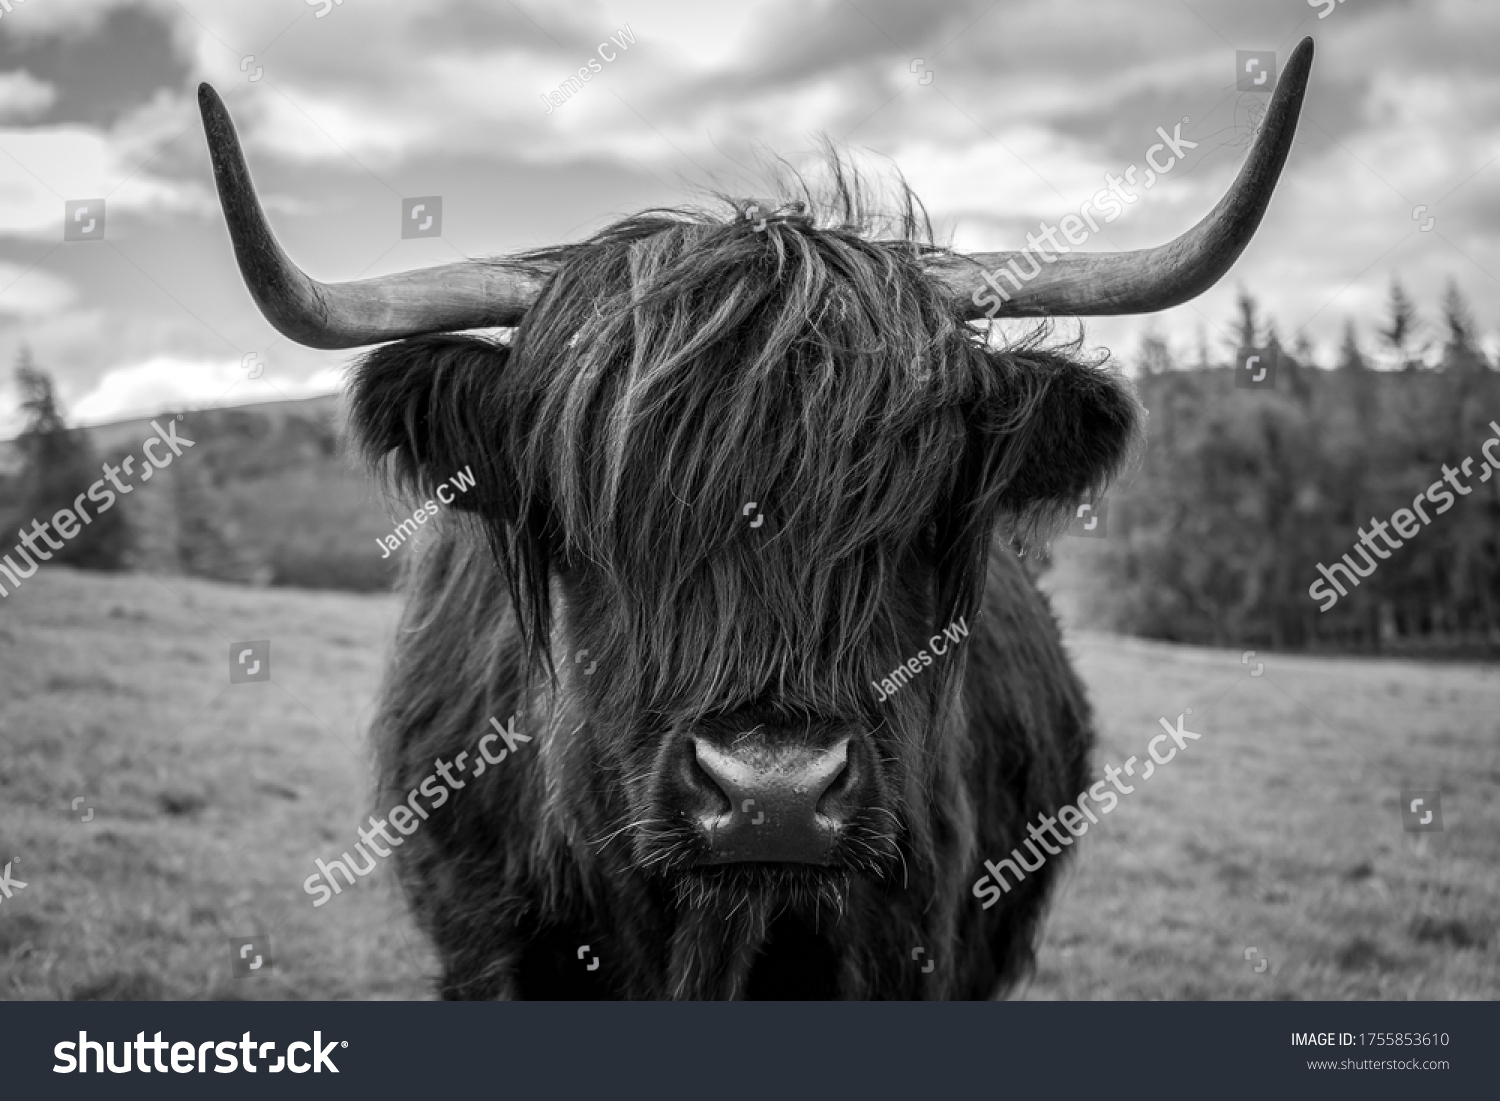 4,520 Shaggy Cow Images, Stock Photos & Vectors | Shutterstock